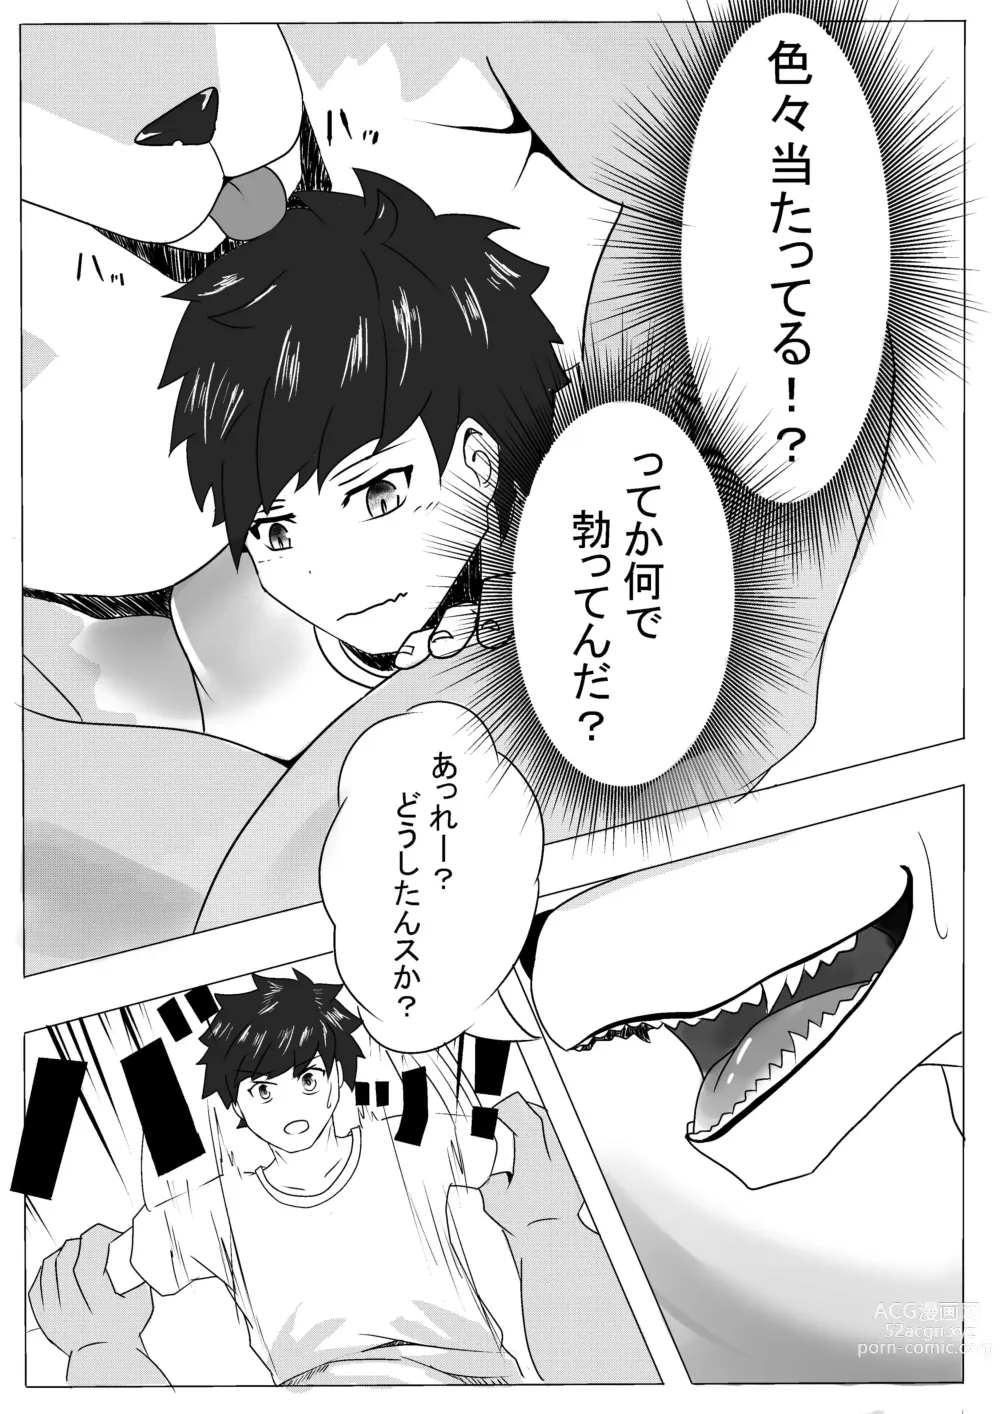 Page 7 of doujinshi Yoru no Ookami